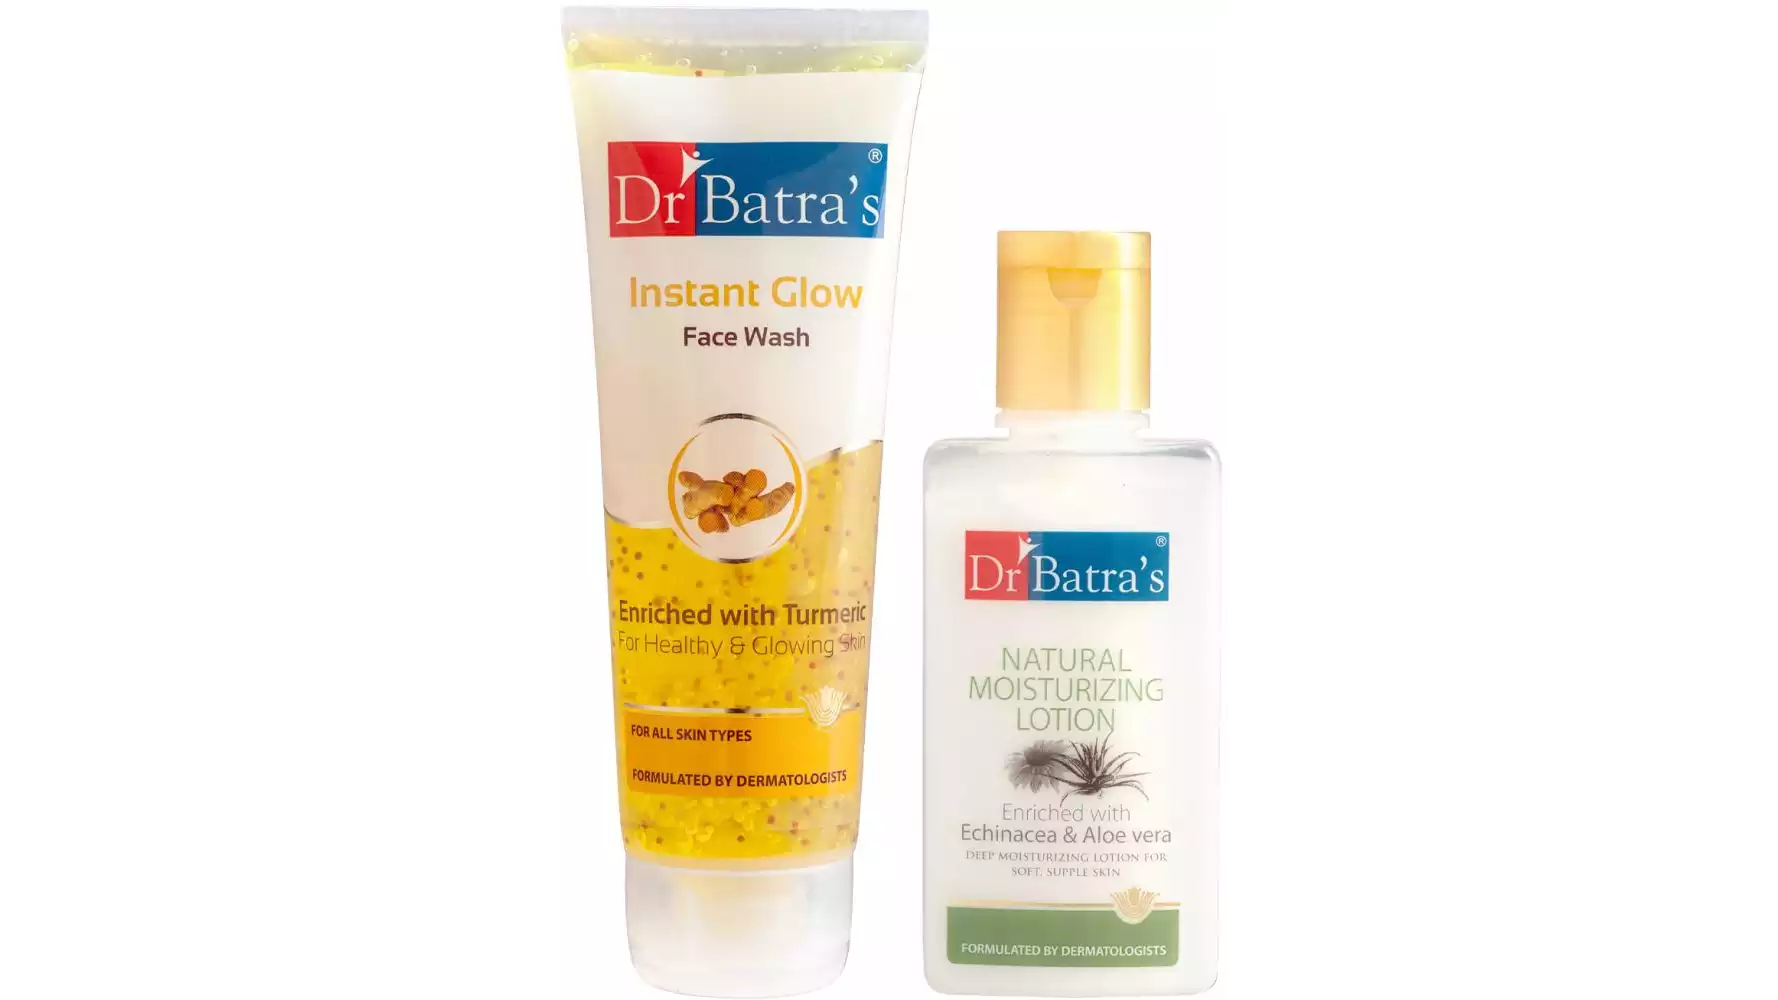 Dr Batras Instant Glow Facewash & Natural Moisturizing Lotion Combo (1Pack)